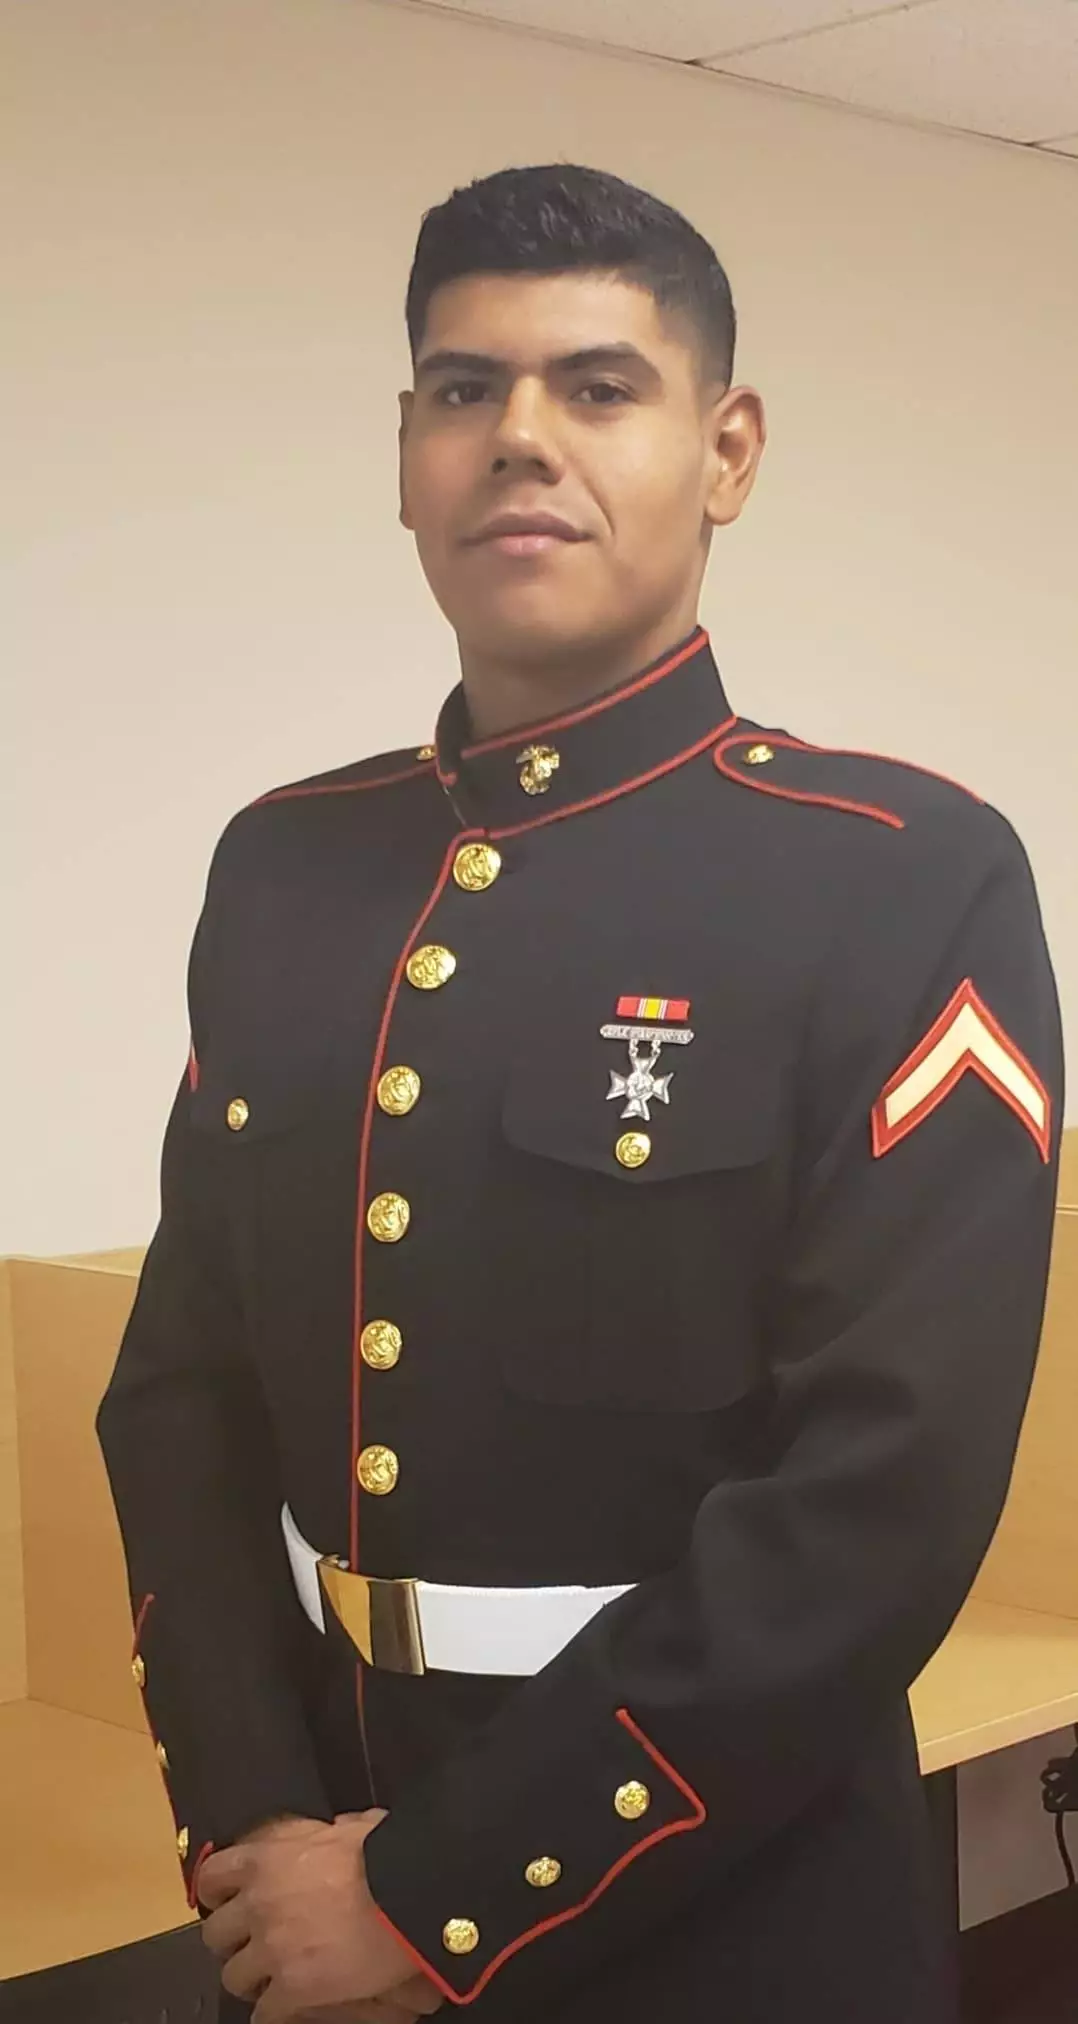 Adan qualified as a marine in July 2019.